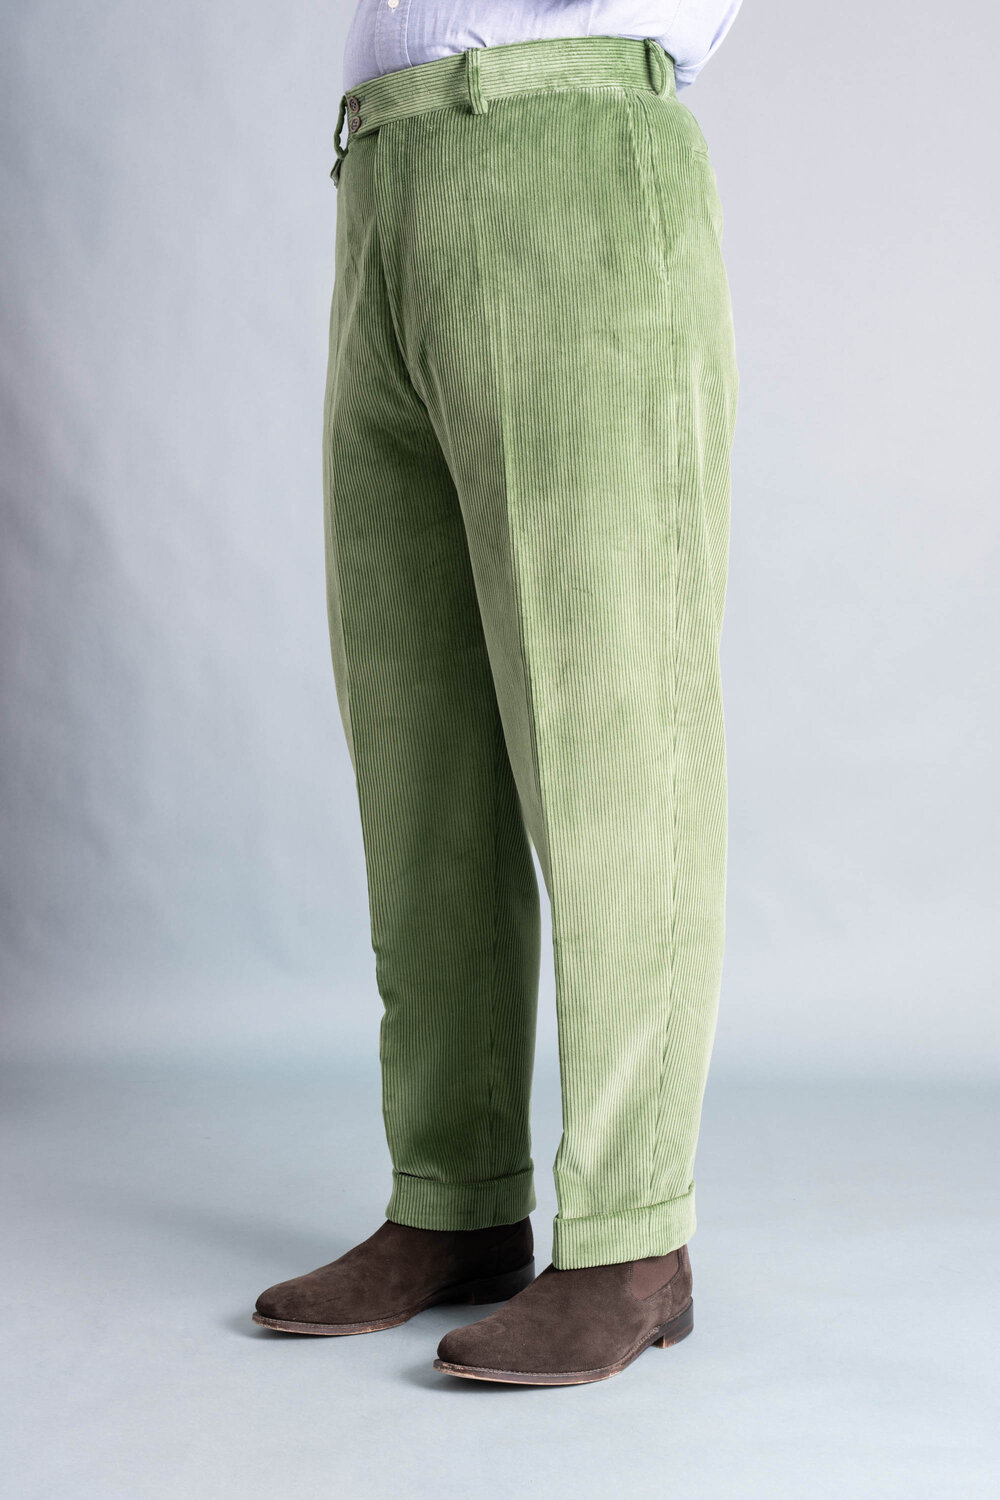 Pine Woods Mens Corduroy Pants Limited Edition Dark Khaki Green Corduroy  Trousers for Men Big and Tall Men Custom Orders - Etsy | Corduroy pants  men, Dark khaki, Business casual men